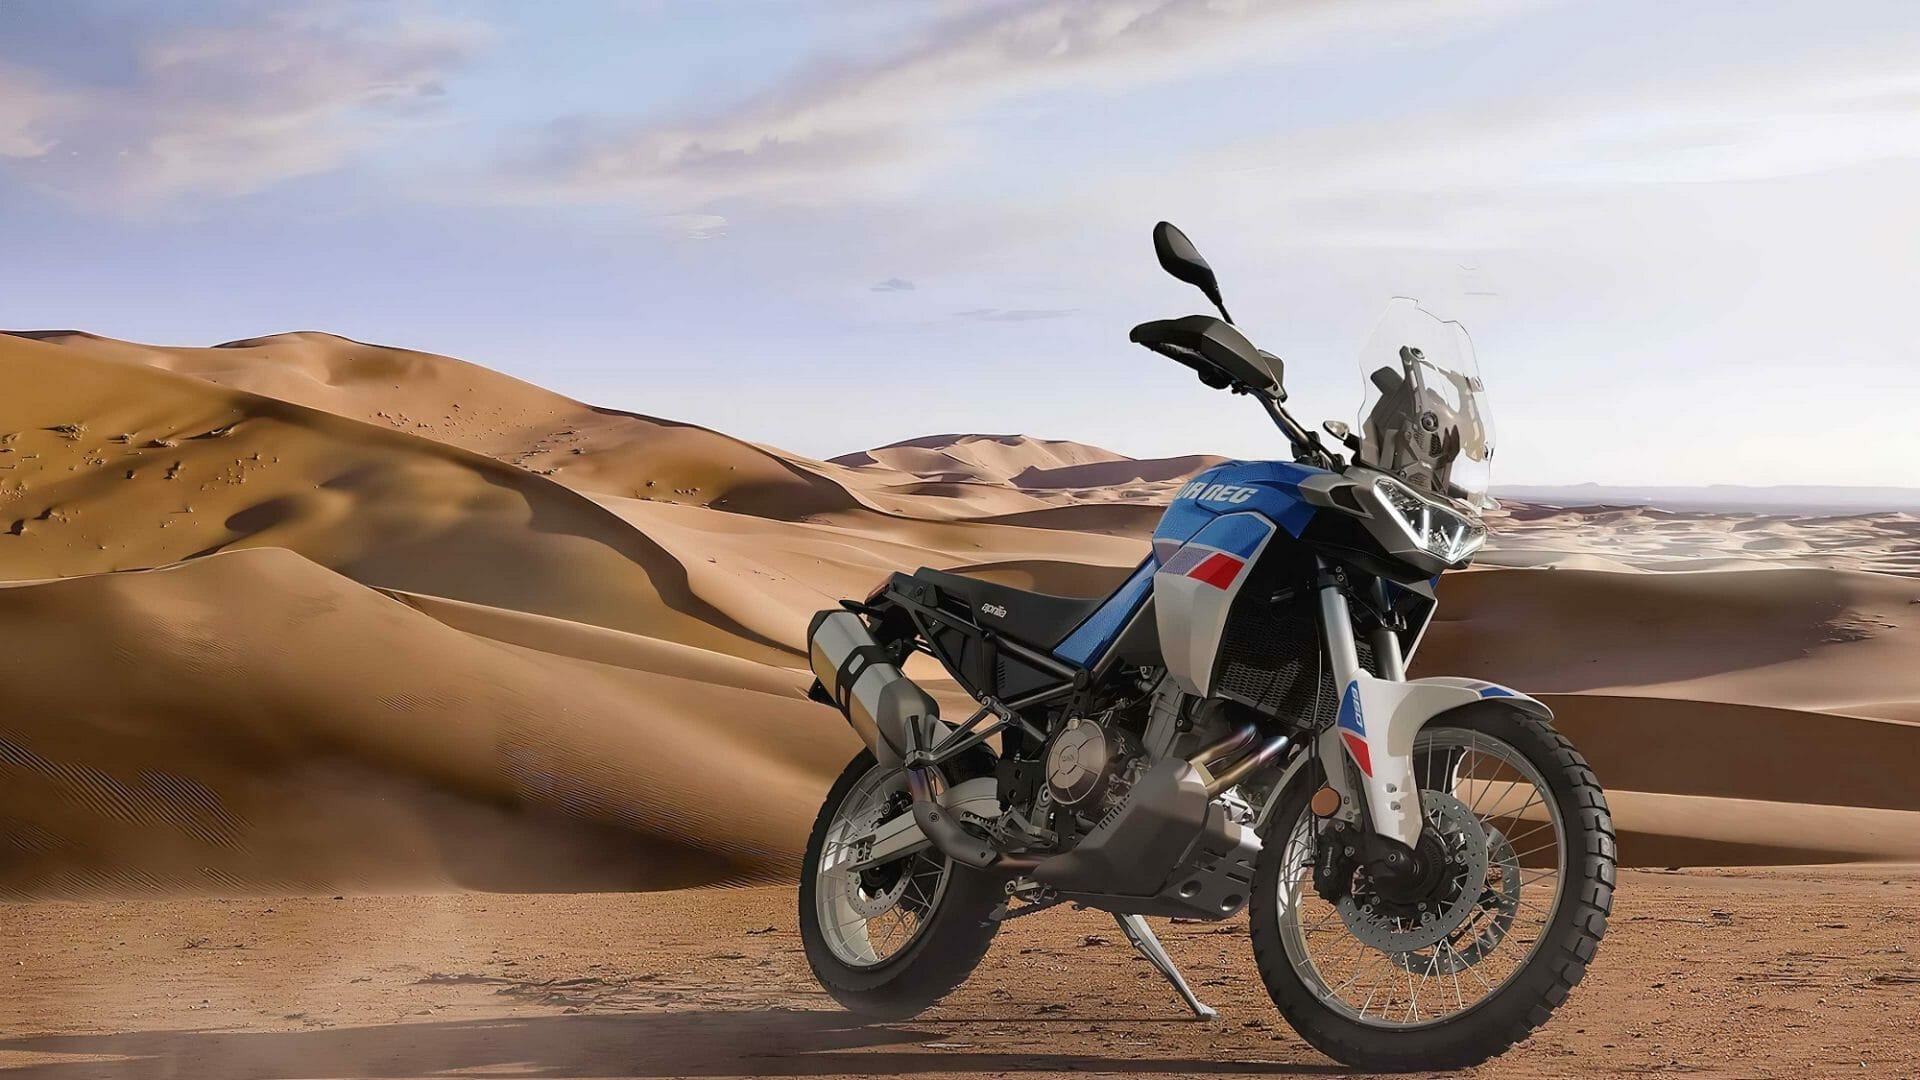 Aprilia unveils the Tuareg 660
- also in the MOTORCYCLES.NEWS APP